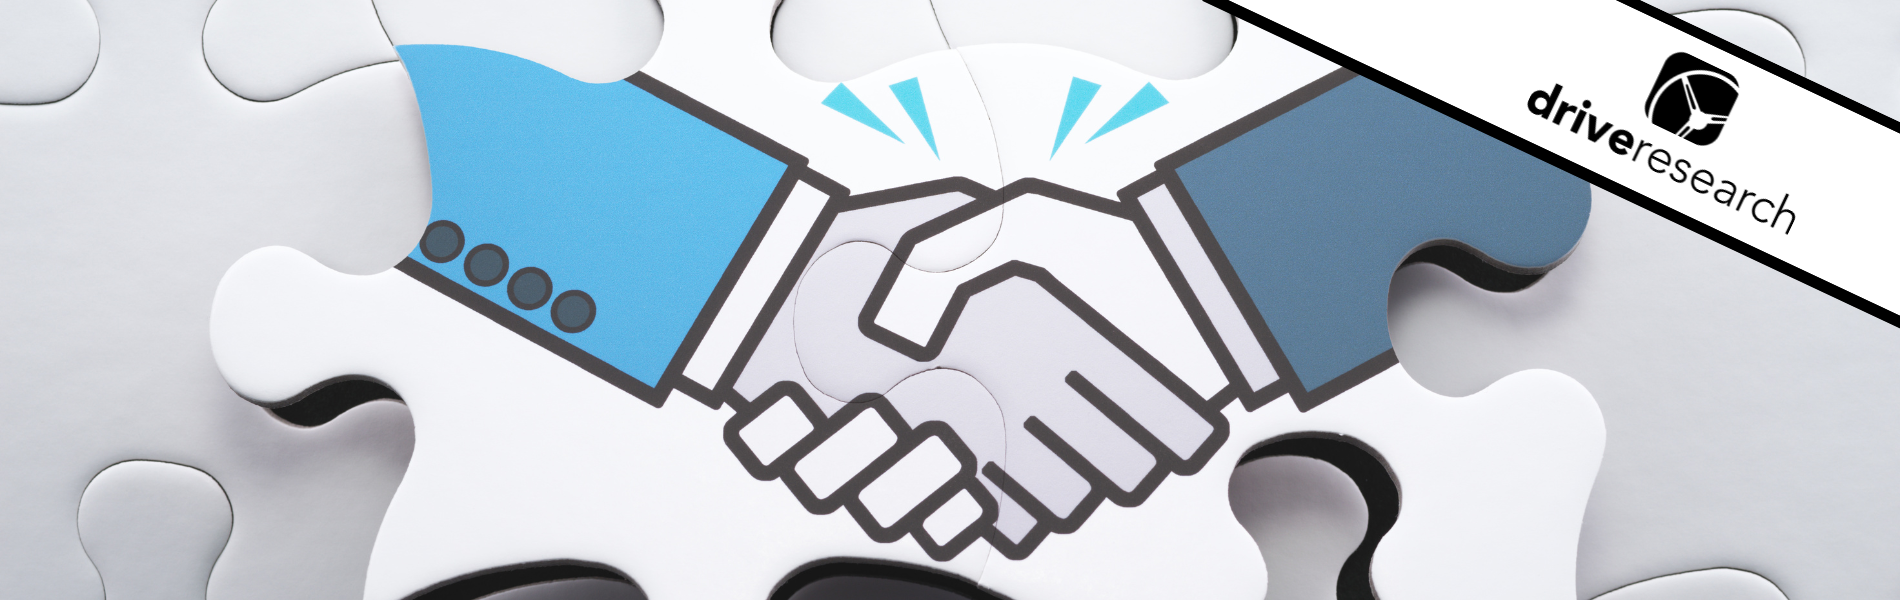 Agreement, influencer partnership concept